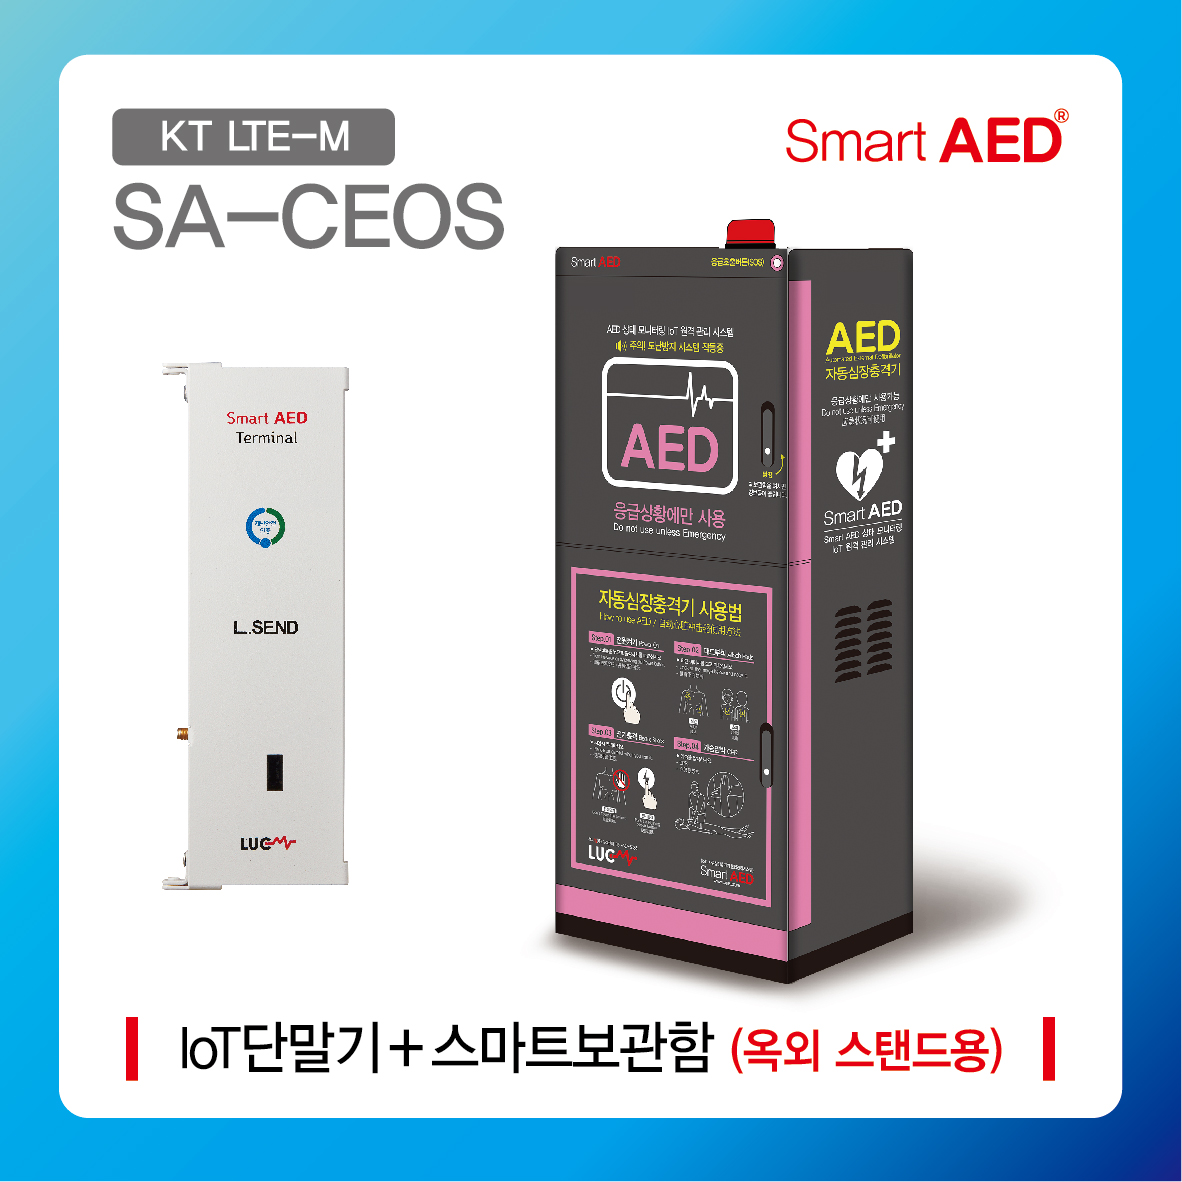 [ SA-CEOS ] 스마트 AED 통합모니터링 장치 및 플랫폼